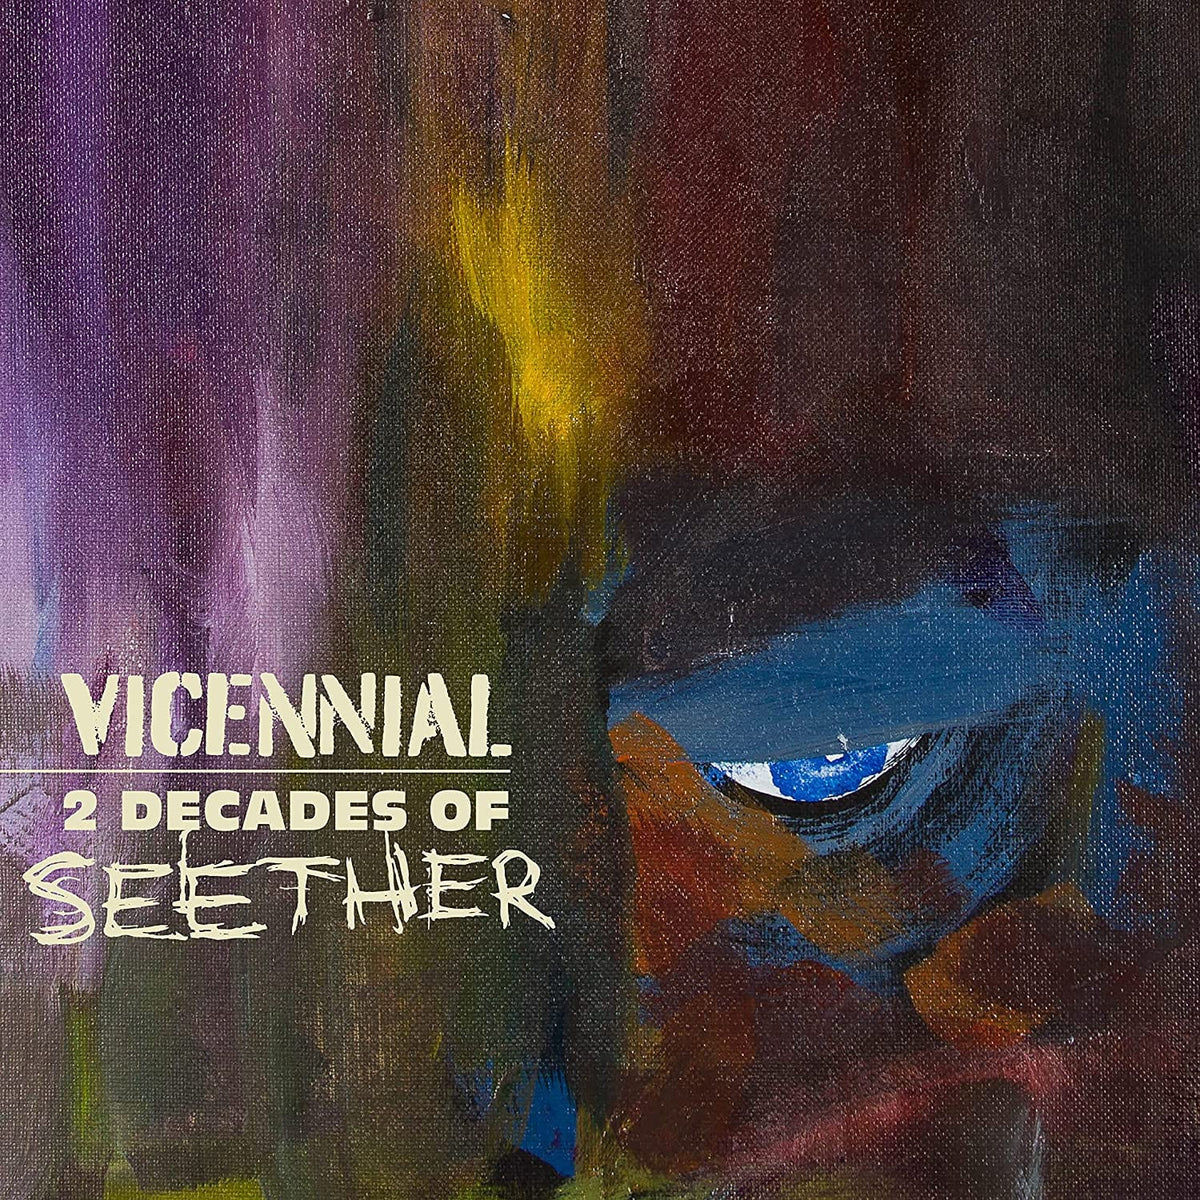 Seether - Vicennial - 2 Decades Of Seether - Third Eye